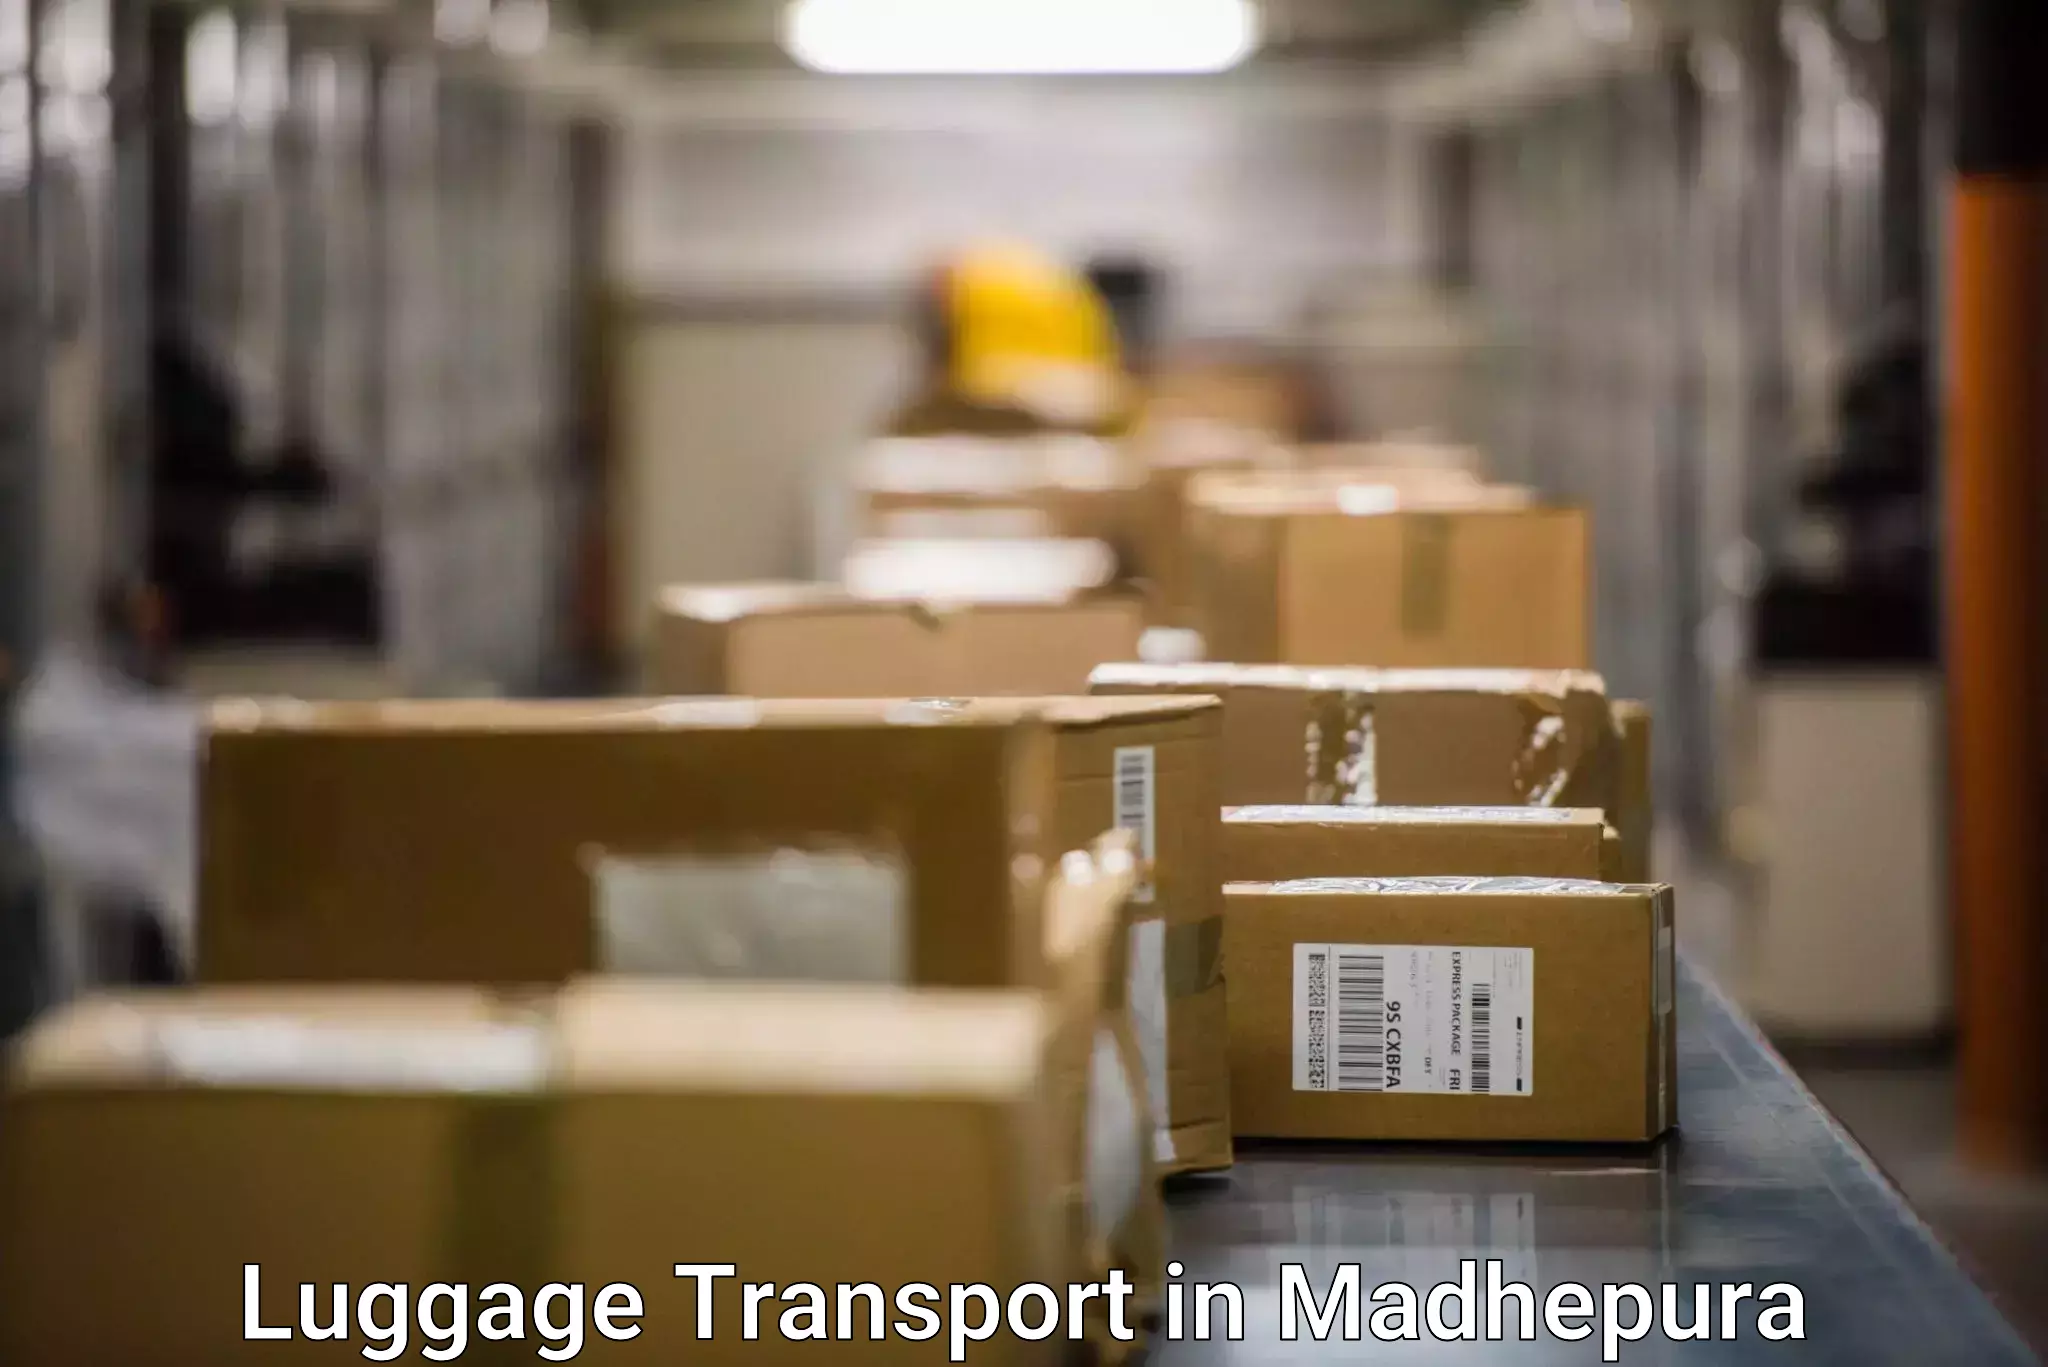 Premium luggage delivery in Madhepura